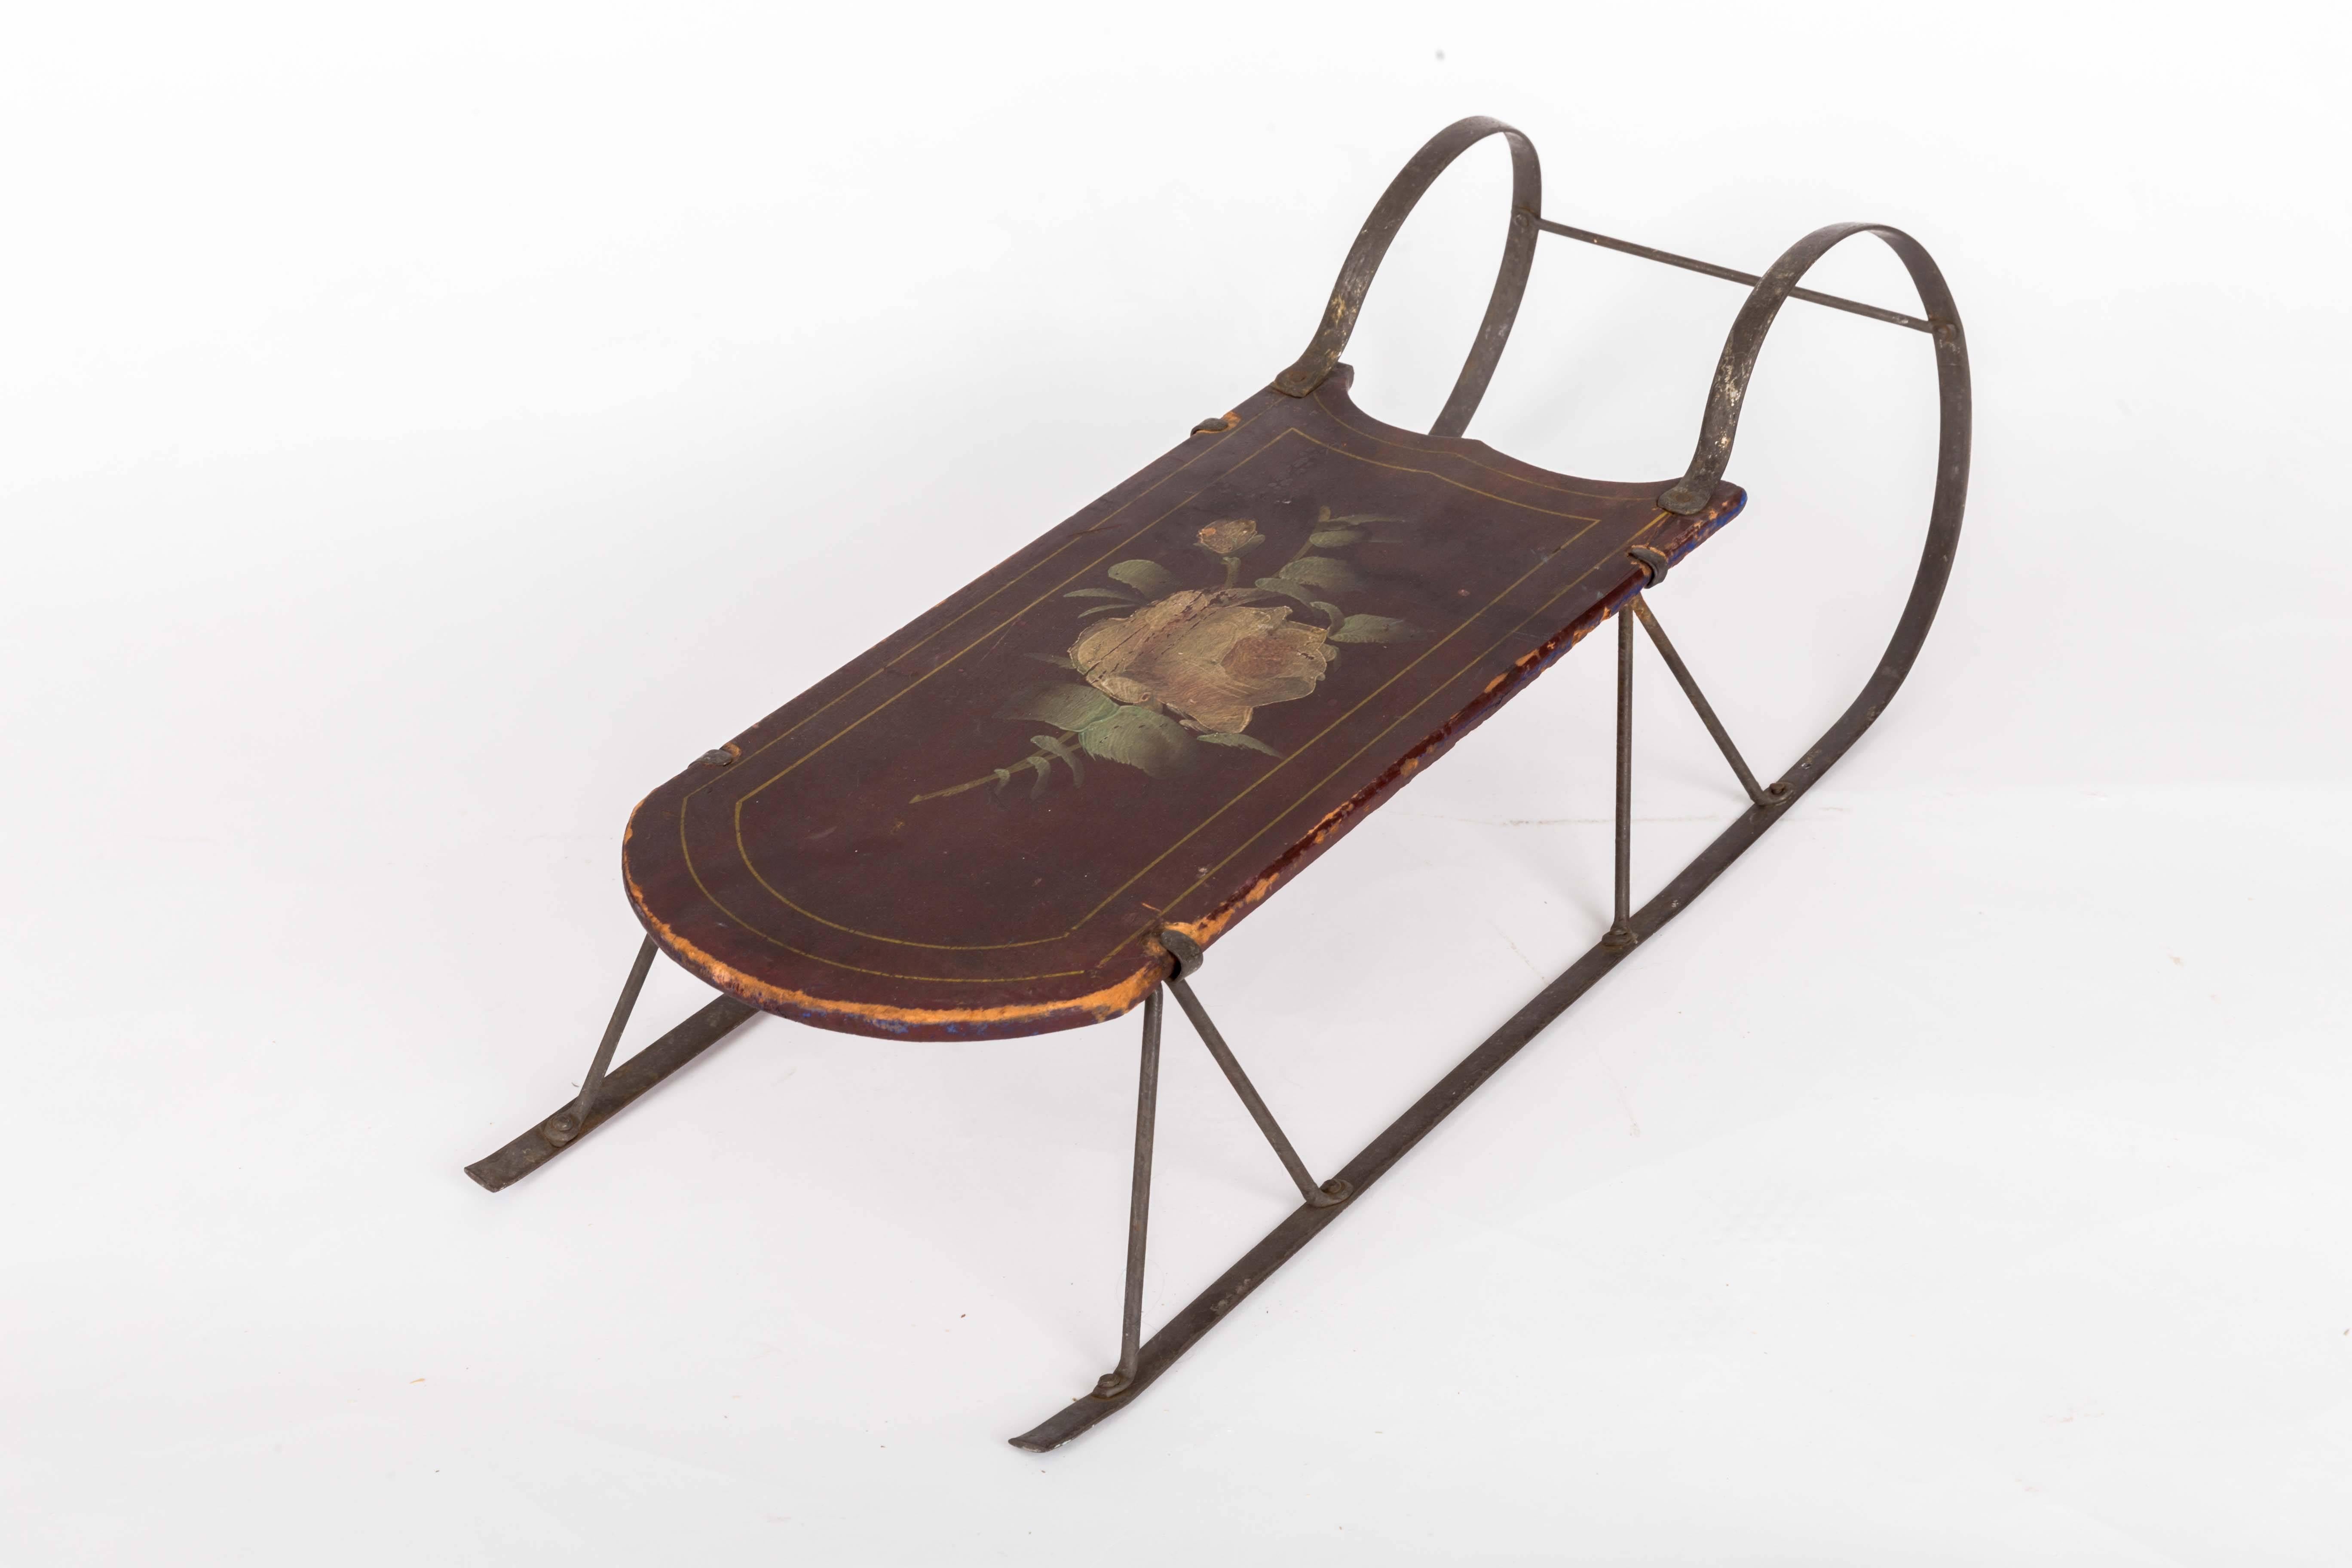 19th-century petite child's sled with bent iron 